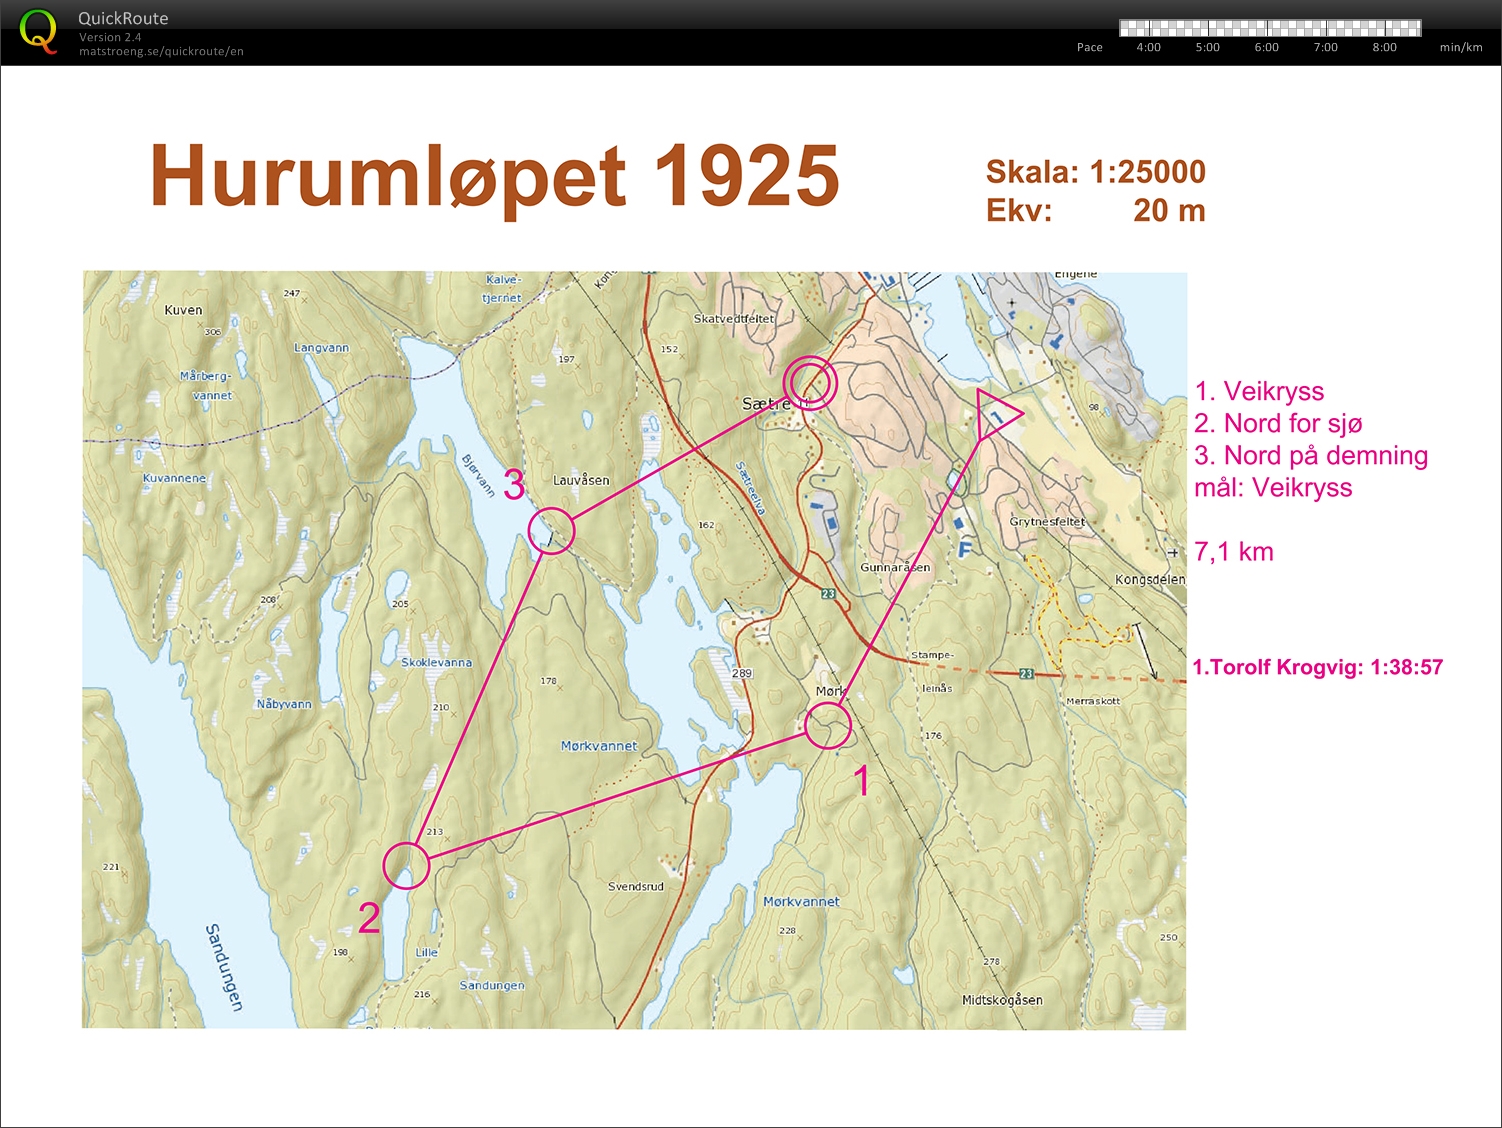 Hurumløpet 1925, Rerun (2014-05-14)